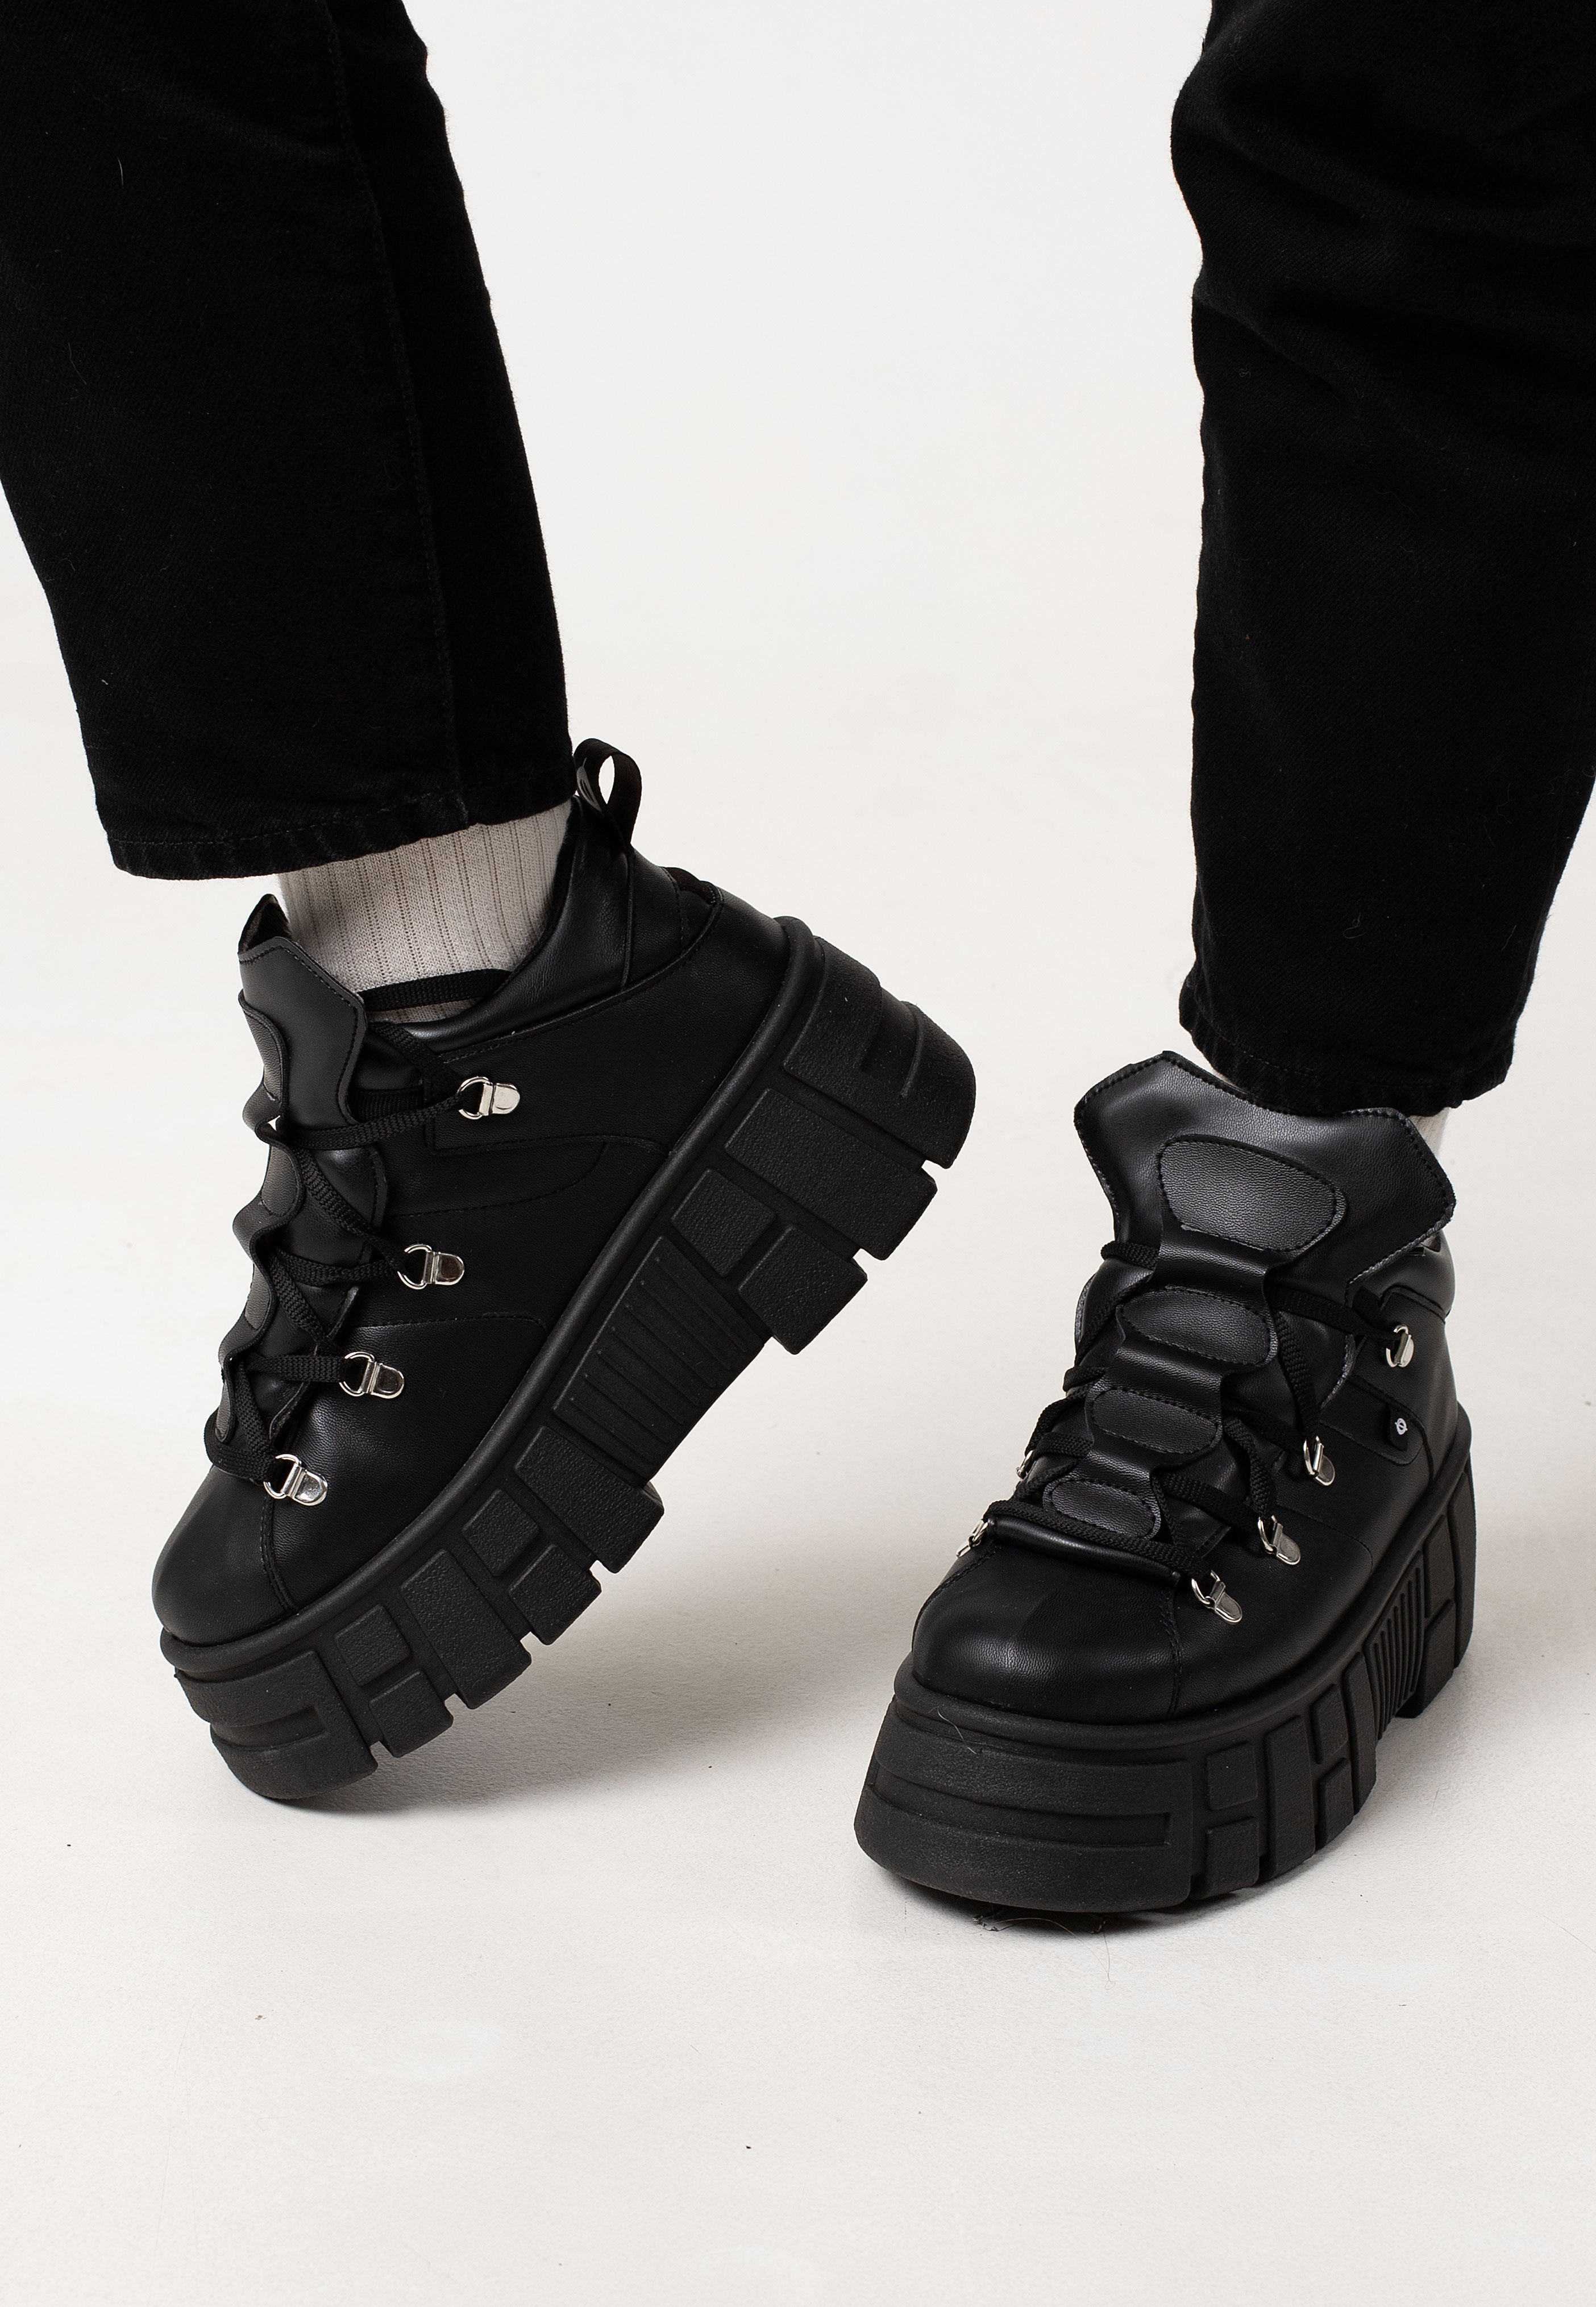 Altercore - Logan Black - Girl Shoes